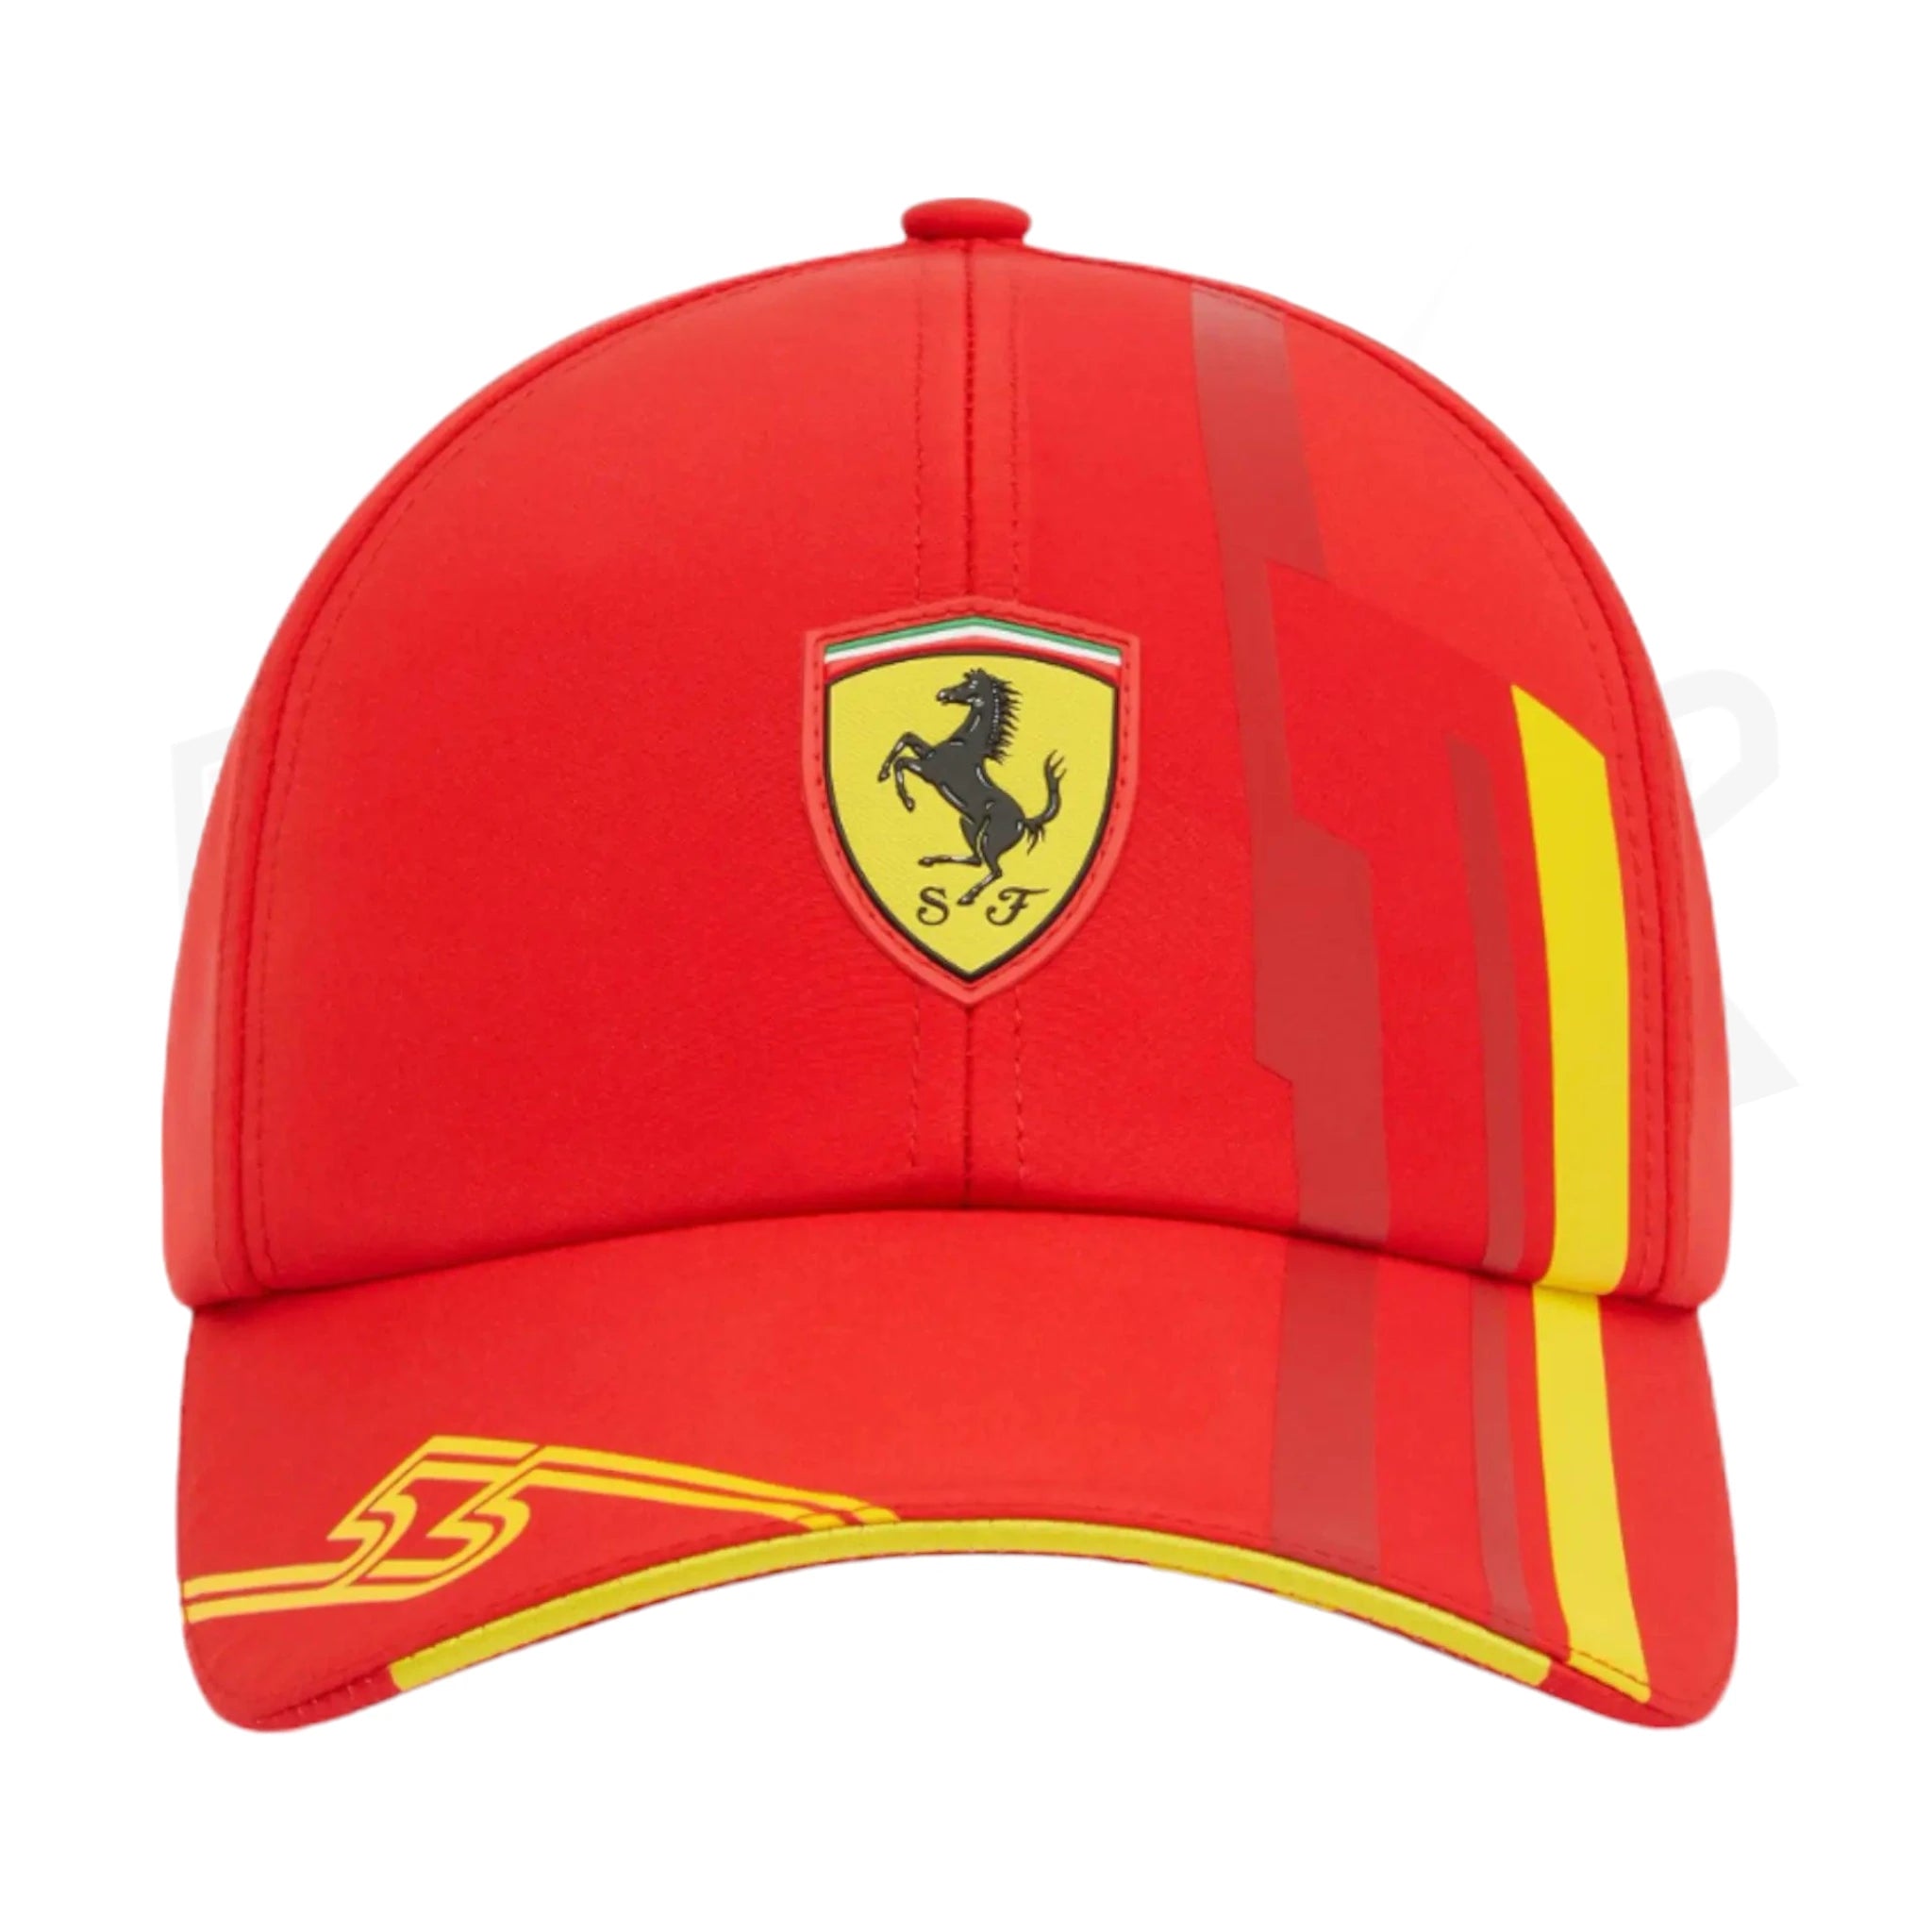 Scuderia Ferrari Team Sainz Replica hat - Barcelona Special Edition